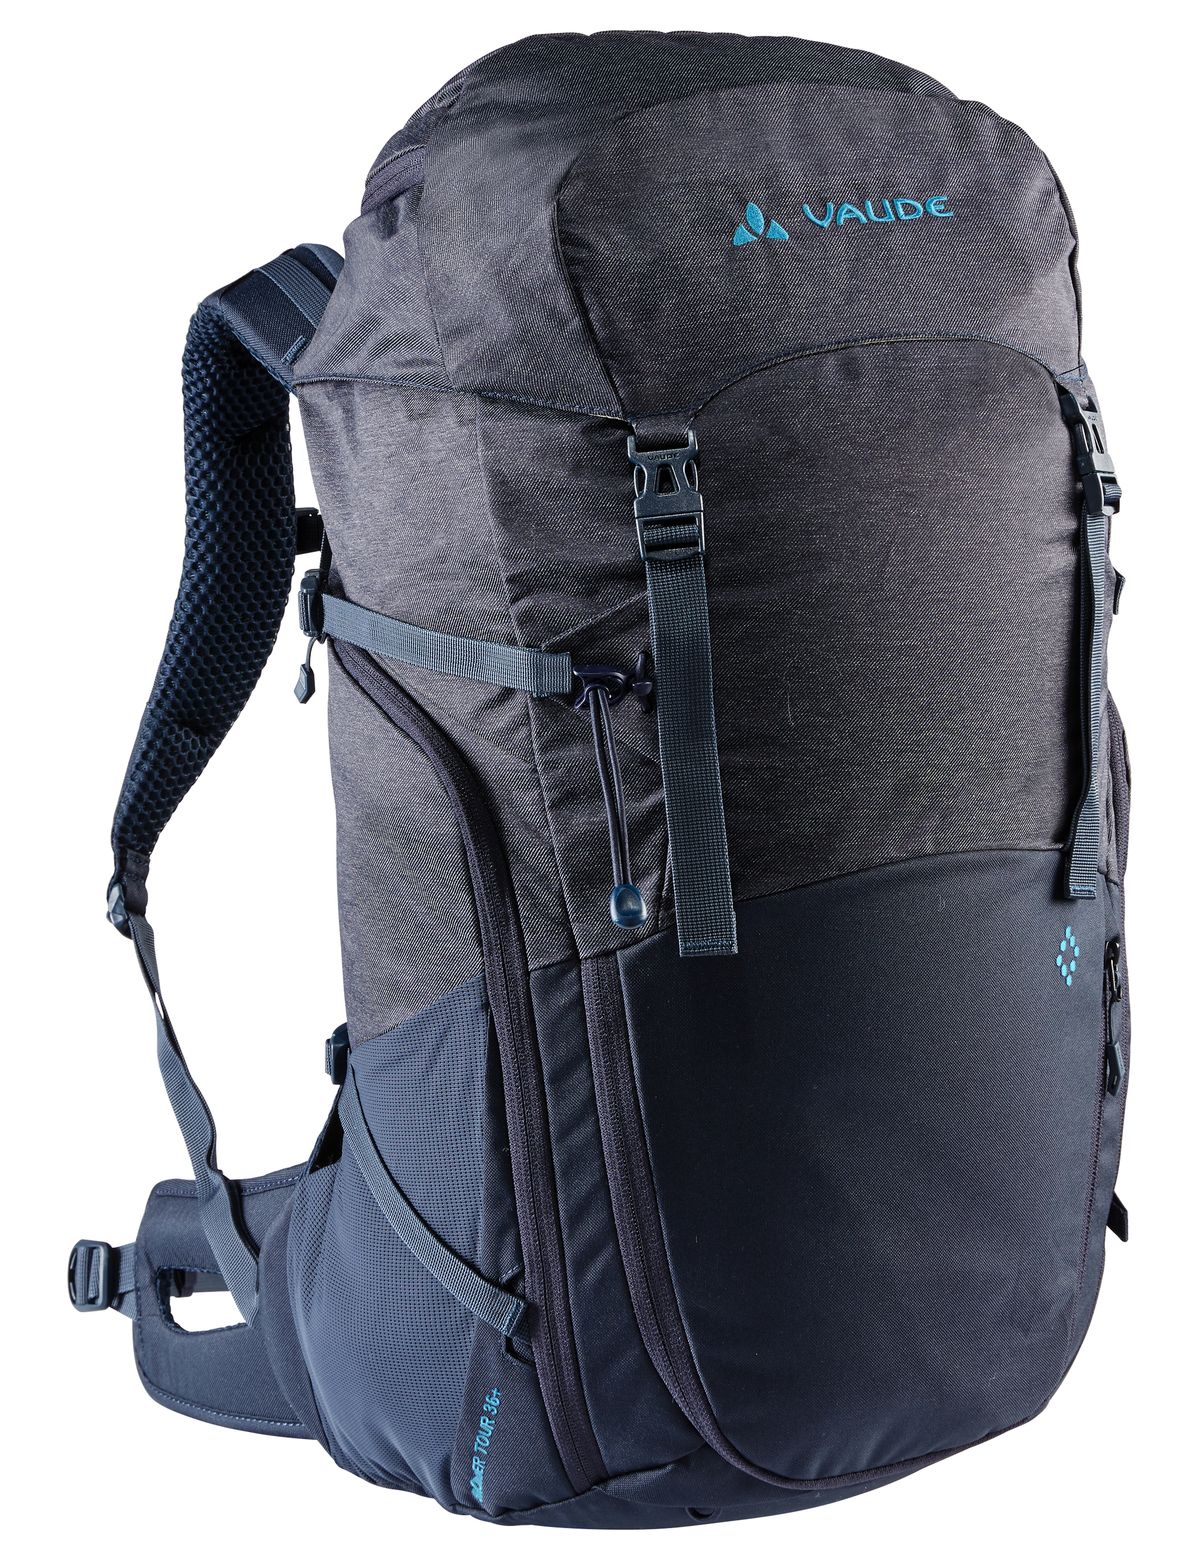 Vaude Skomer Tour 36+ - Women's hiking backpack